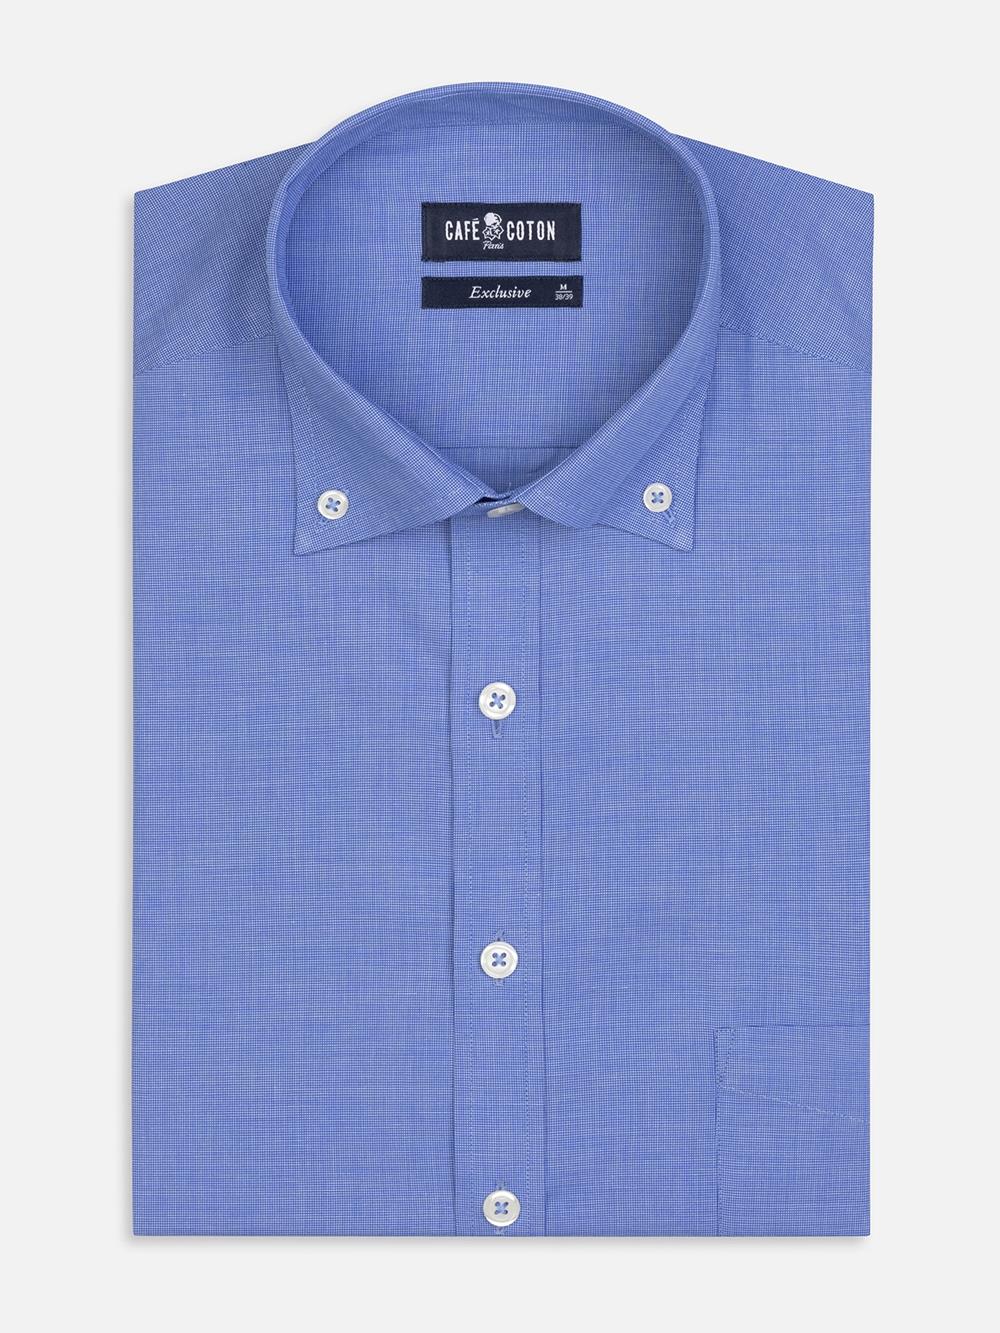 Daria blue poplin shirt - Button down collar